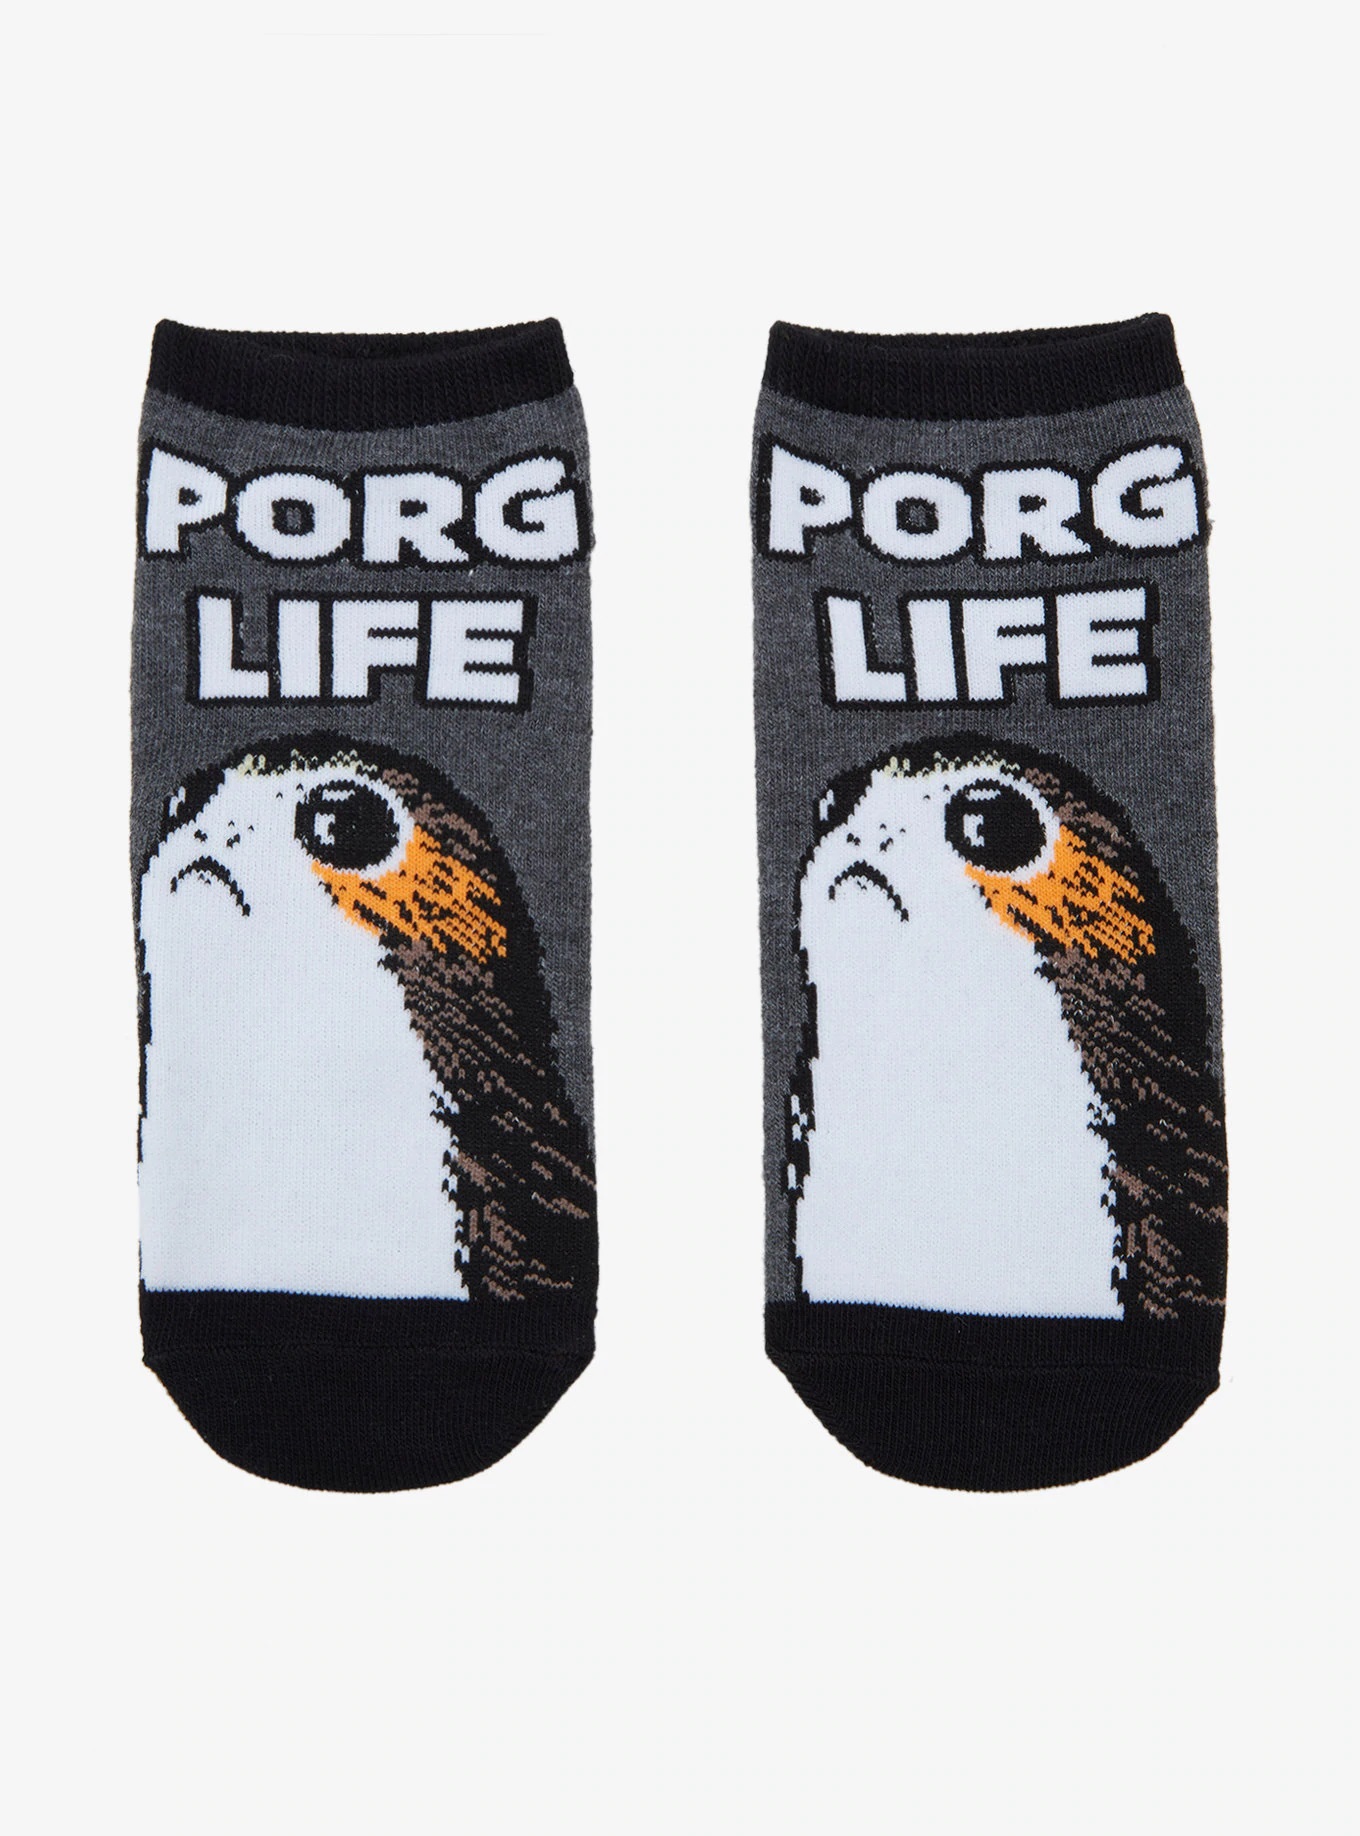 Star Wars Porg Life Ankle Socks at Hot Topic